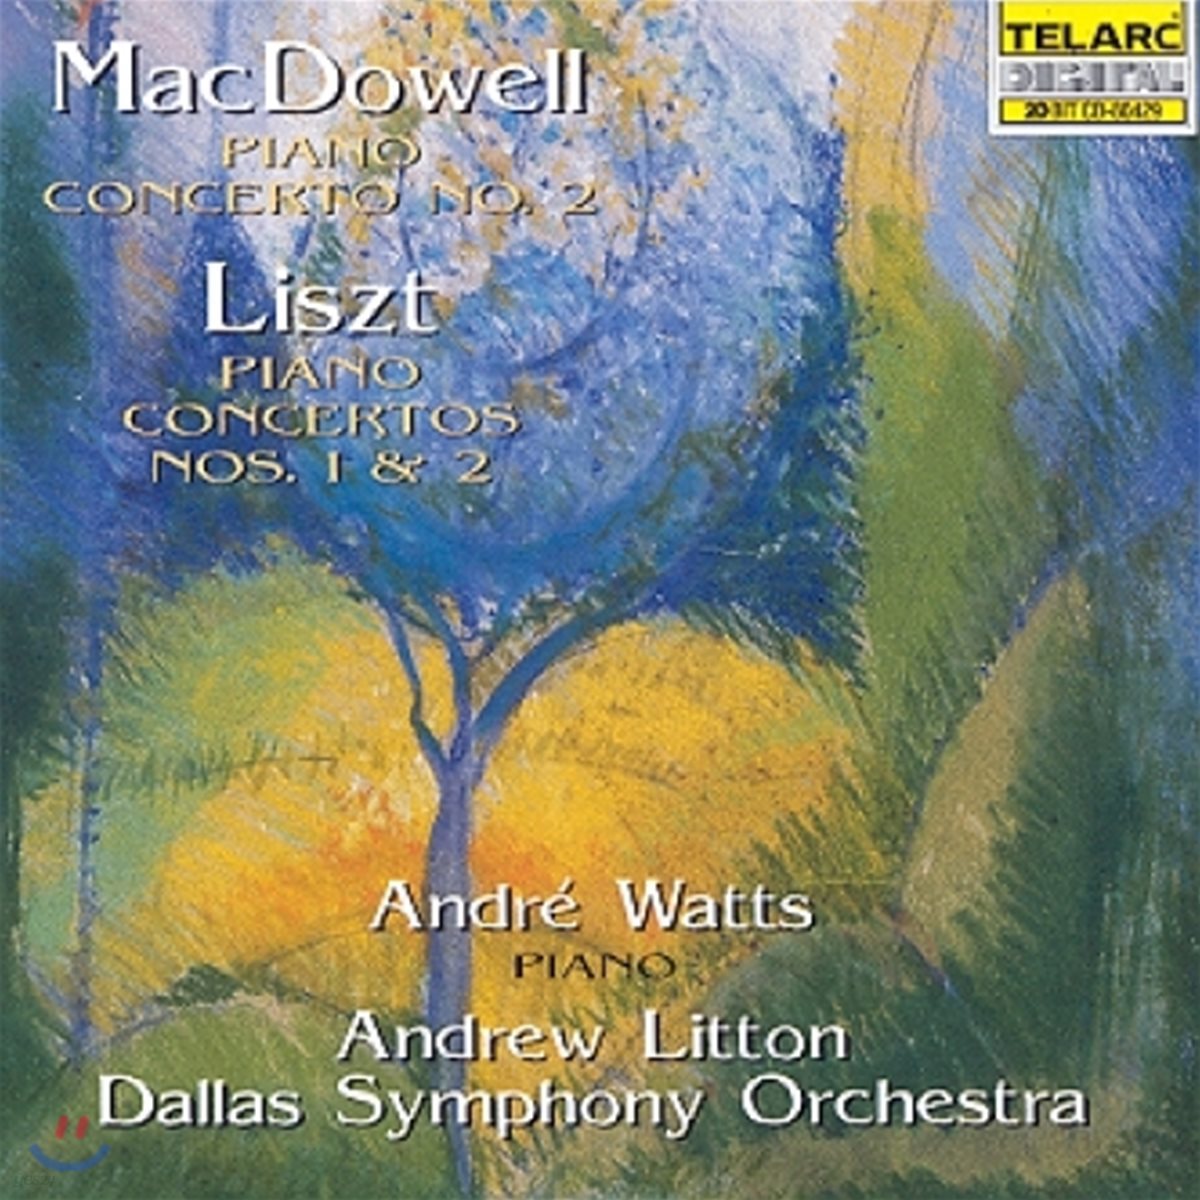 Andre Watts 앤드류 맥도웰: 피아노 협주곡 2번 / 리스트: 피아노 협주곡 1번 &amp; 2번 (Edward MacDowell / Liszt: Piano Concertos)